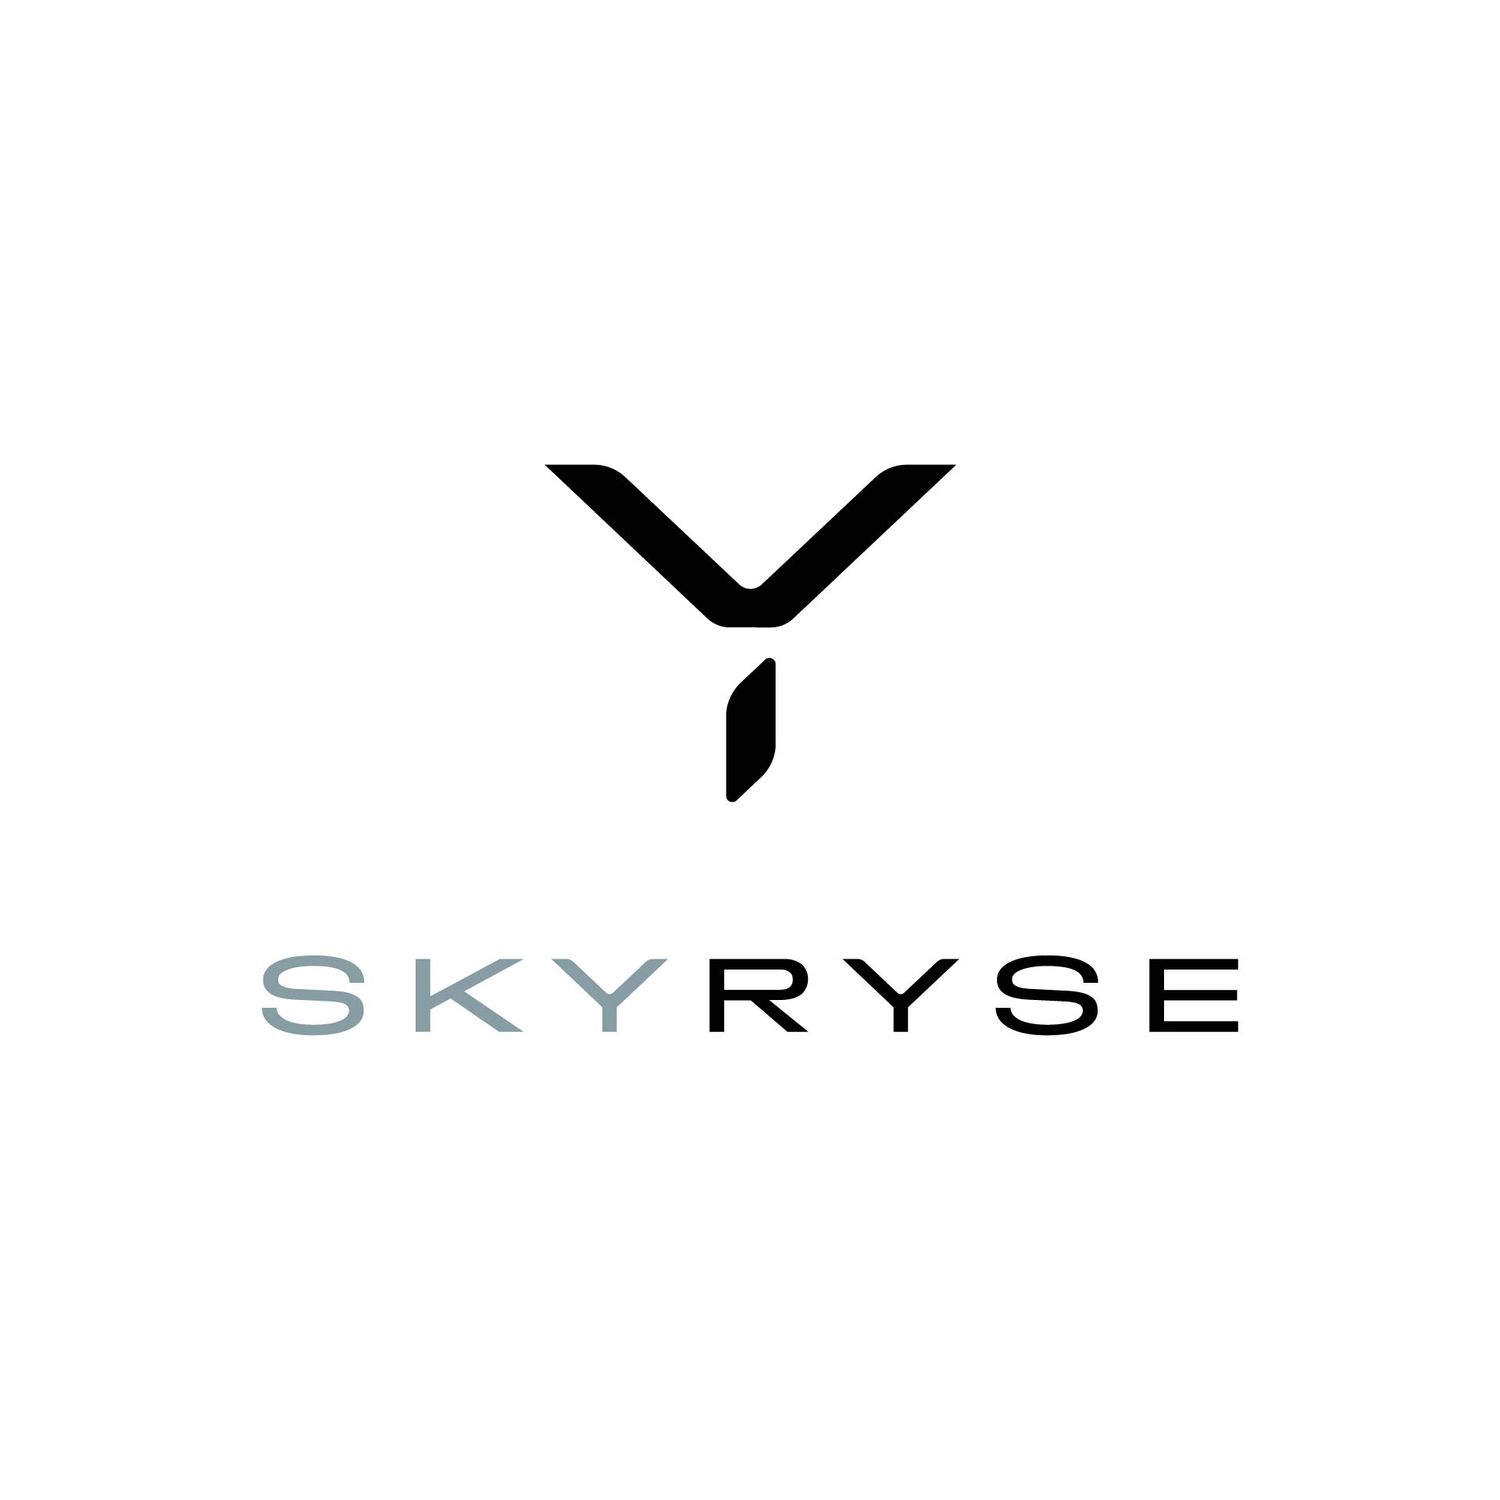 Skyryse Logo for active job listings